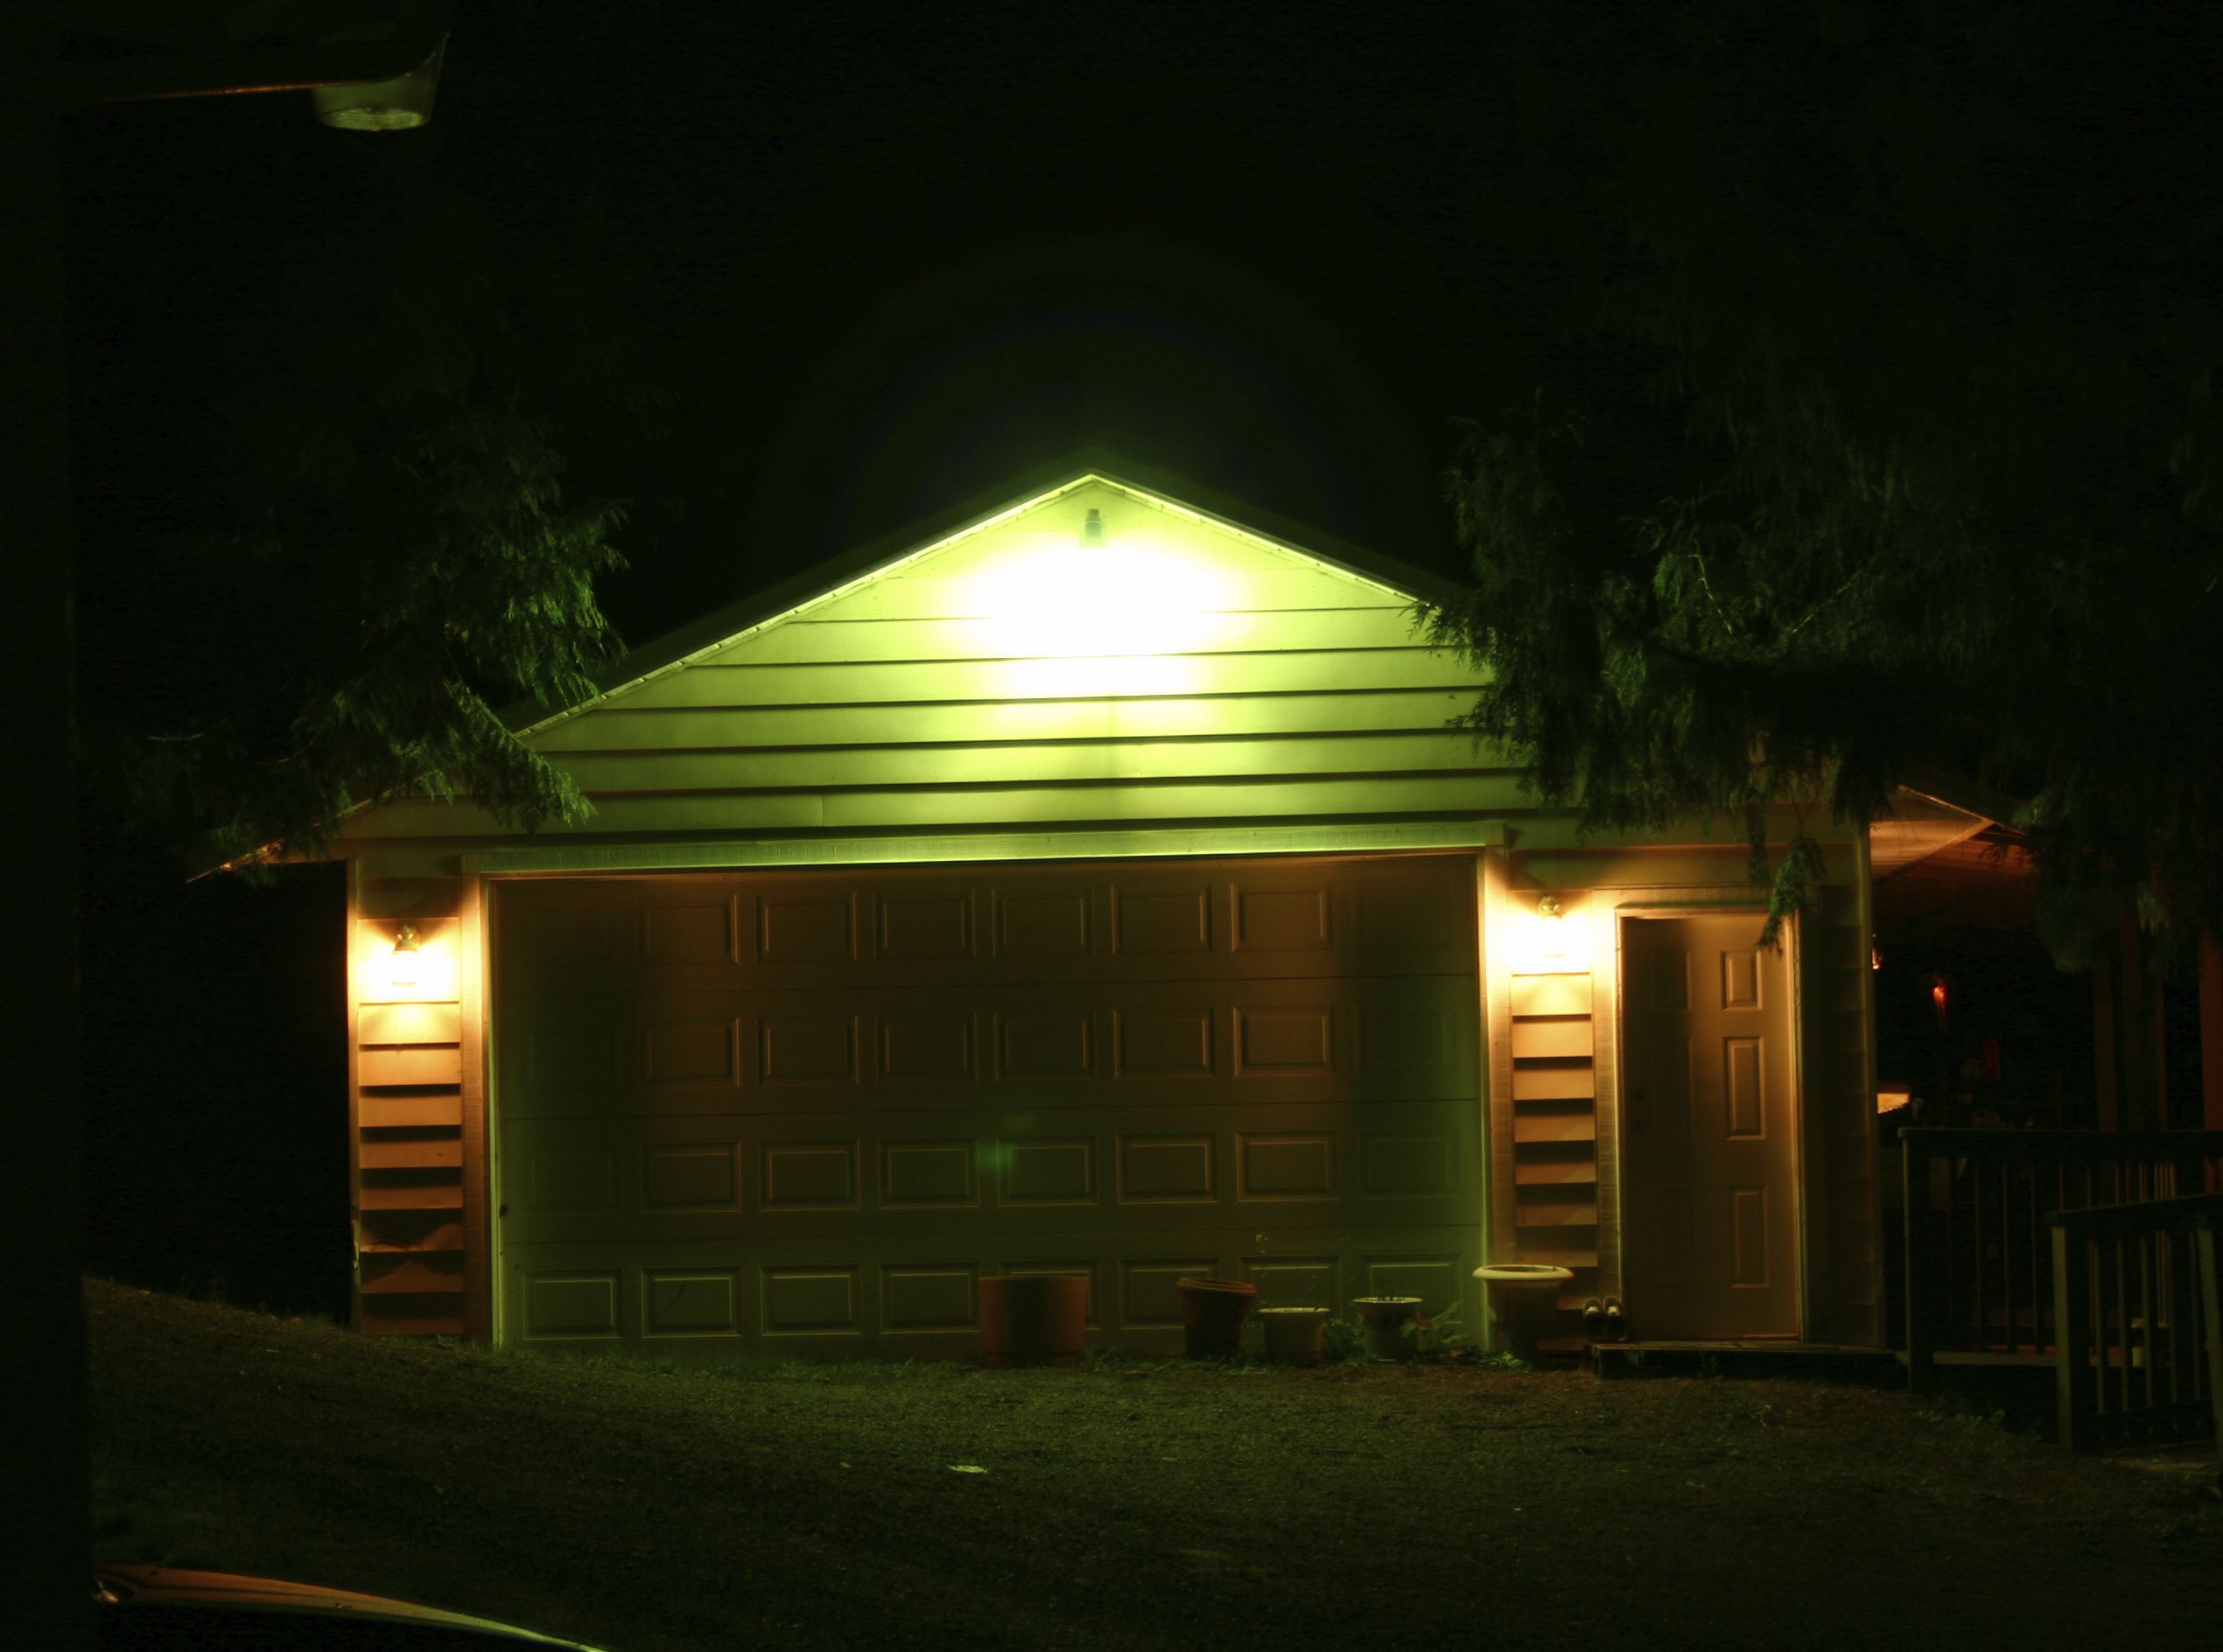 Garage At Night - iStock_000000164339_Medium